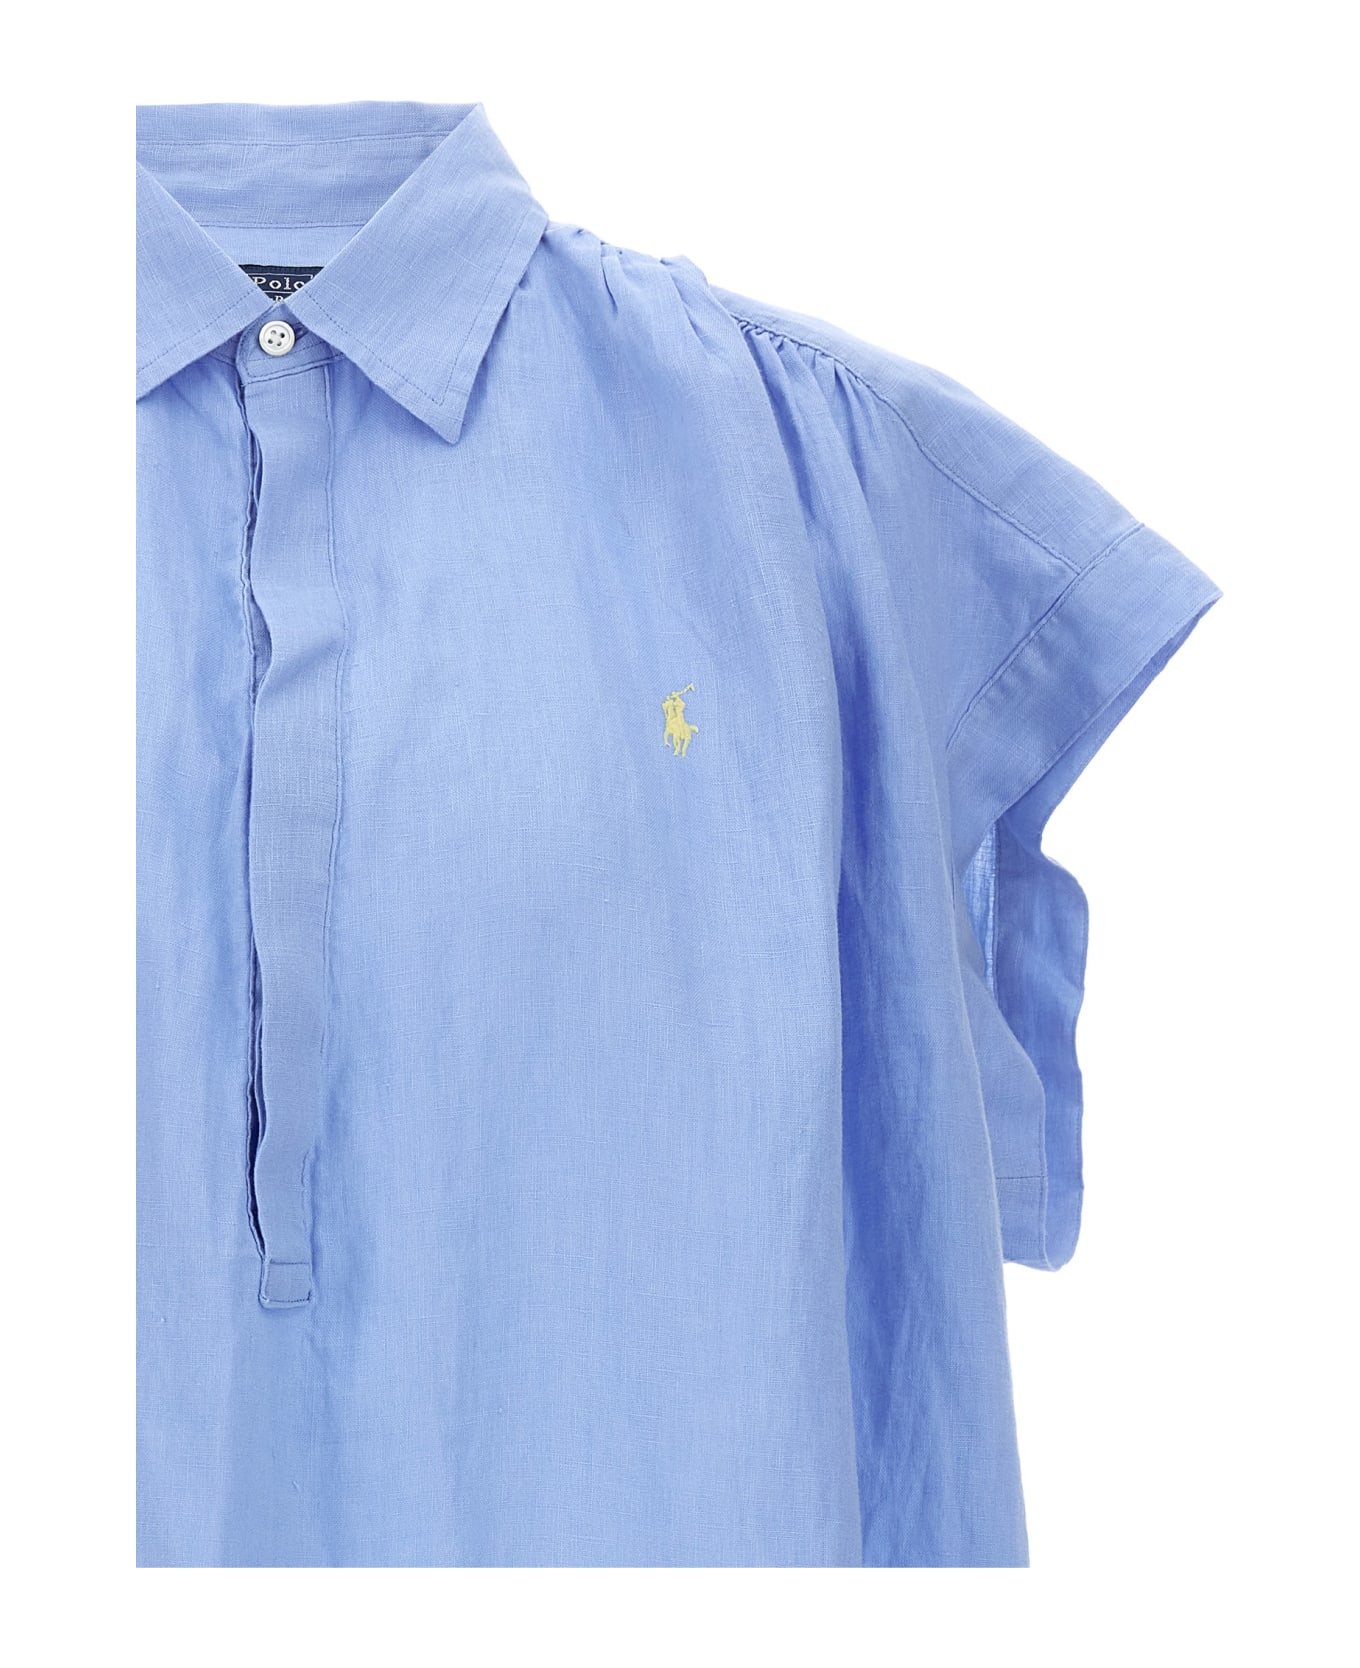 Polo Ralph Lauren Logo Embroidery Blouse - Light Blue